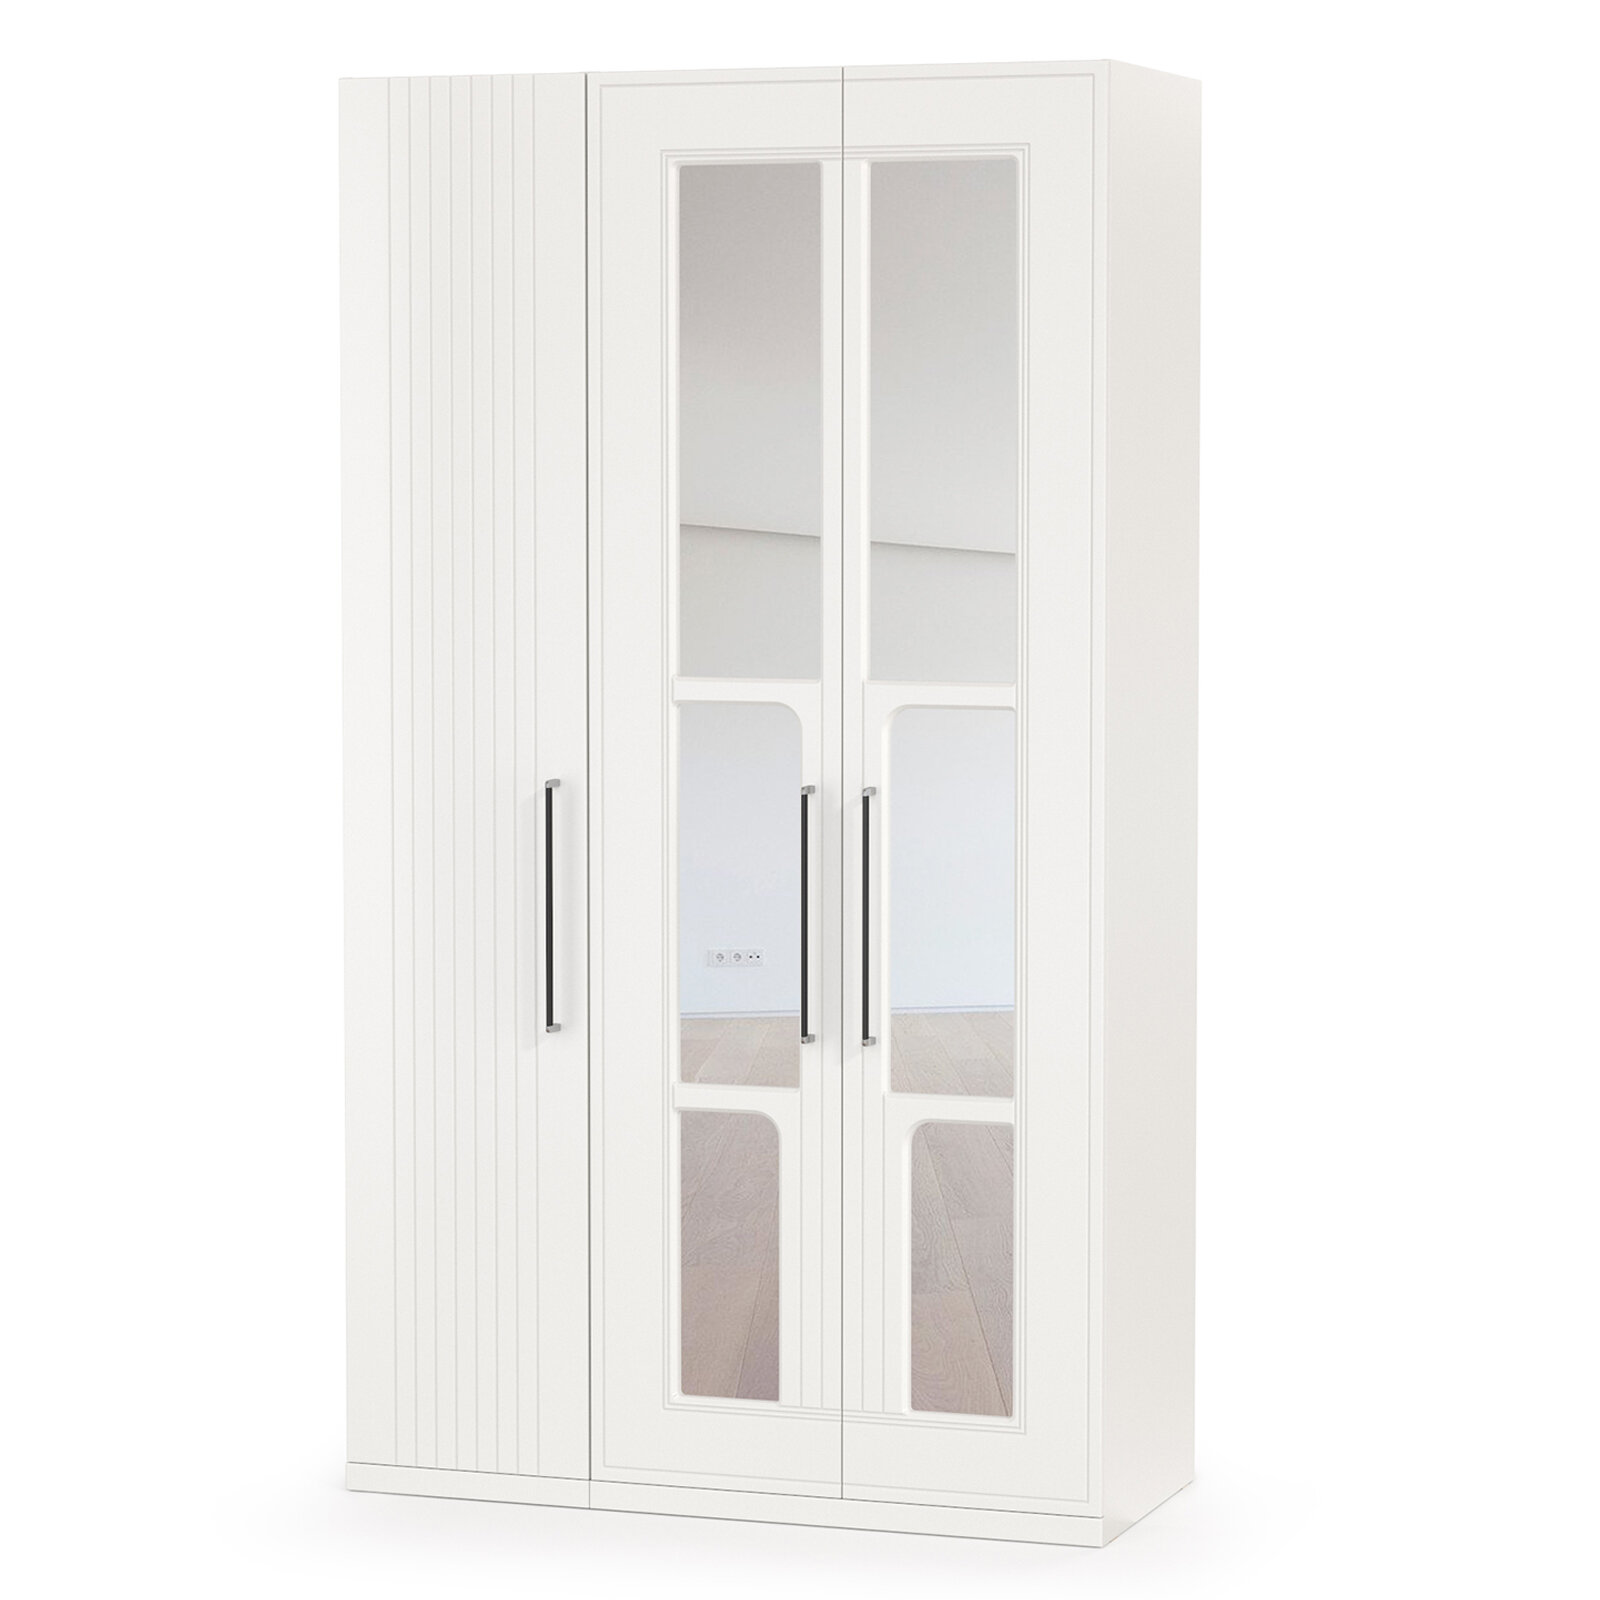 Шкаф для одежды 3-х створчатый с зеркалами Валенсия, цвет белый шагрень, ШхГхВ 126х54,2х225,3 см, универсальная сборка